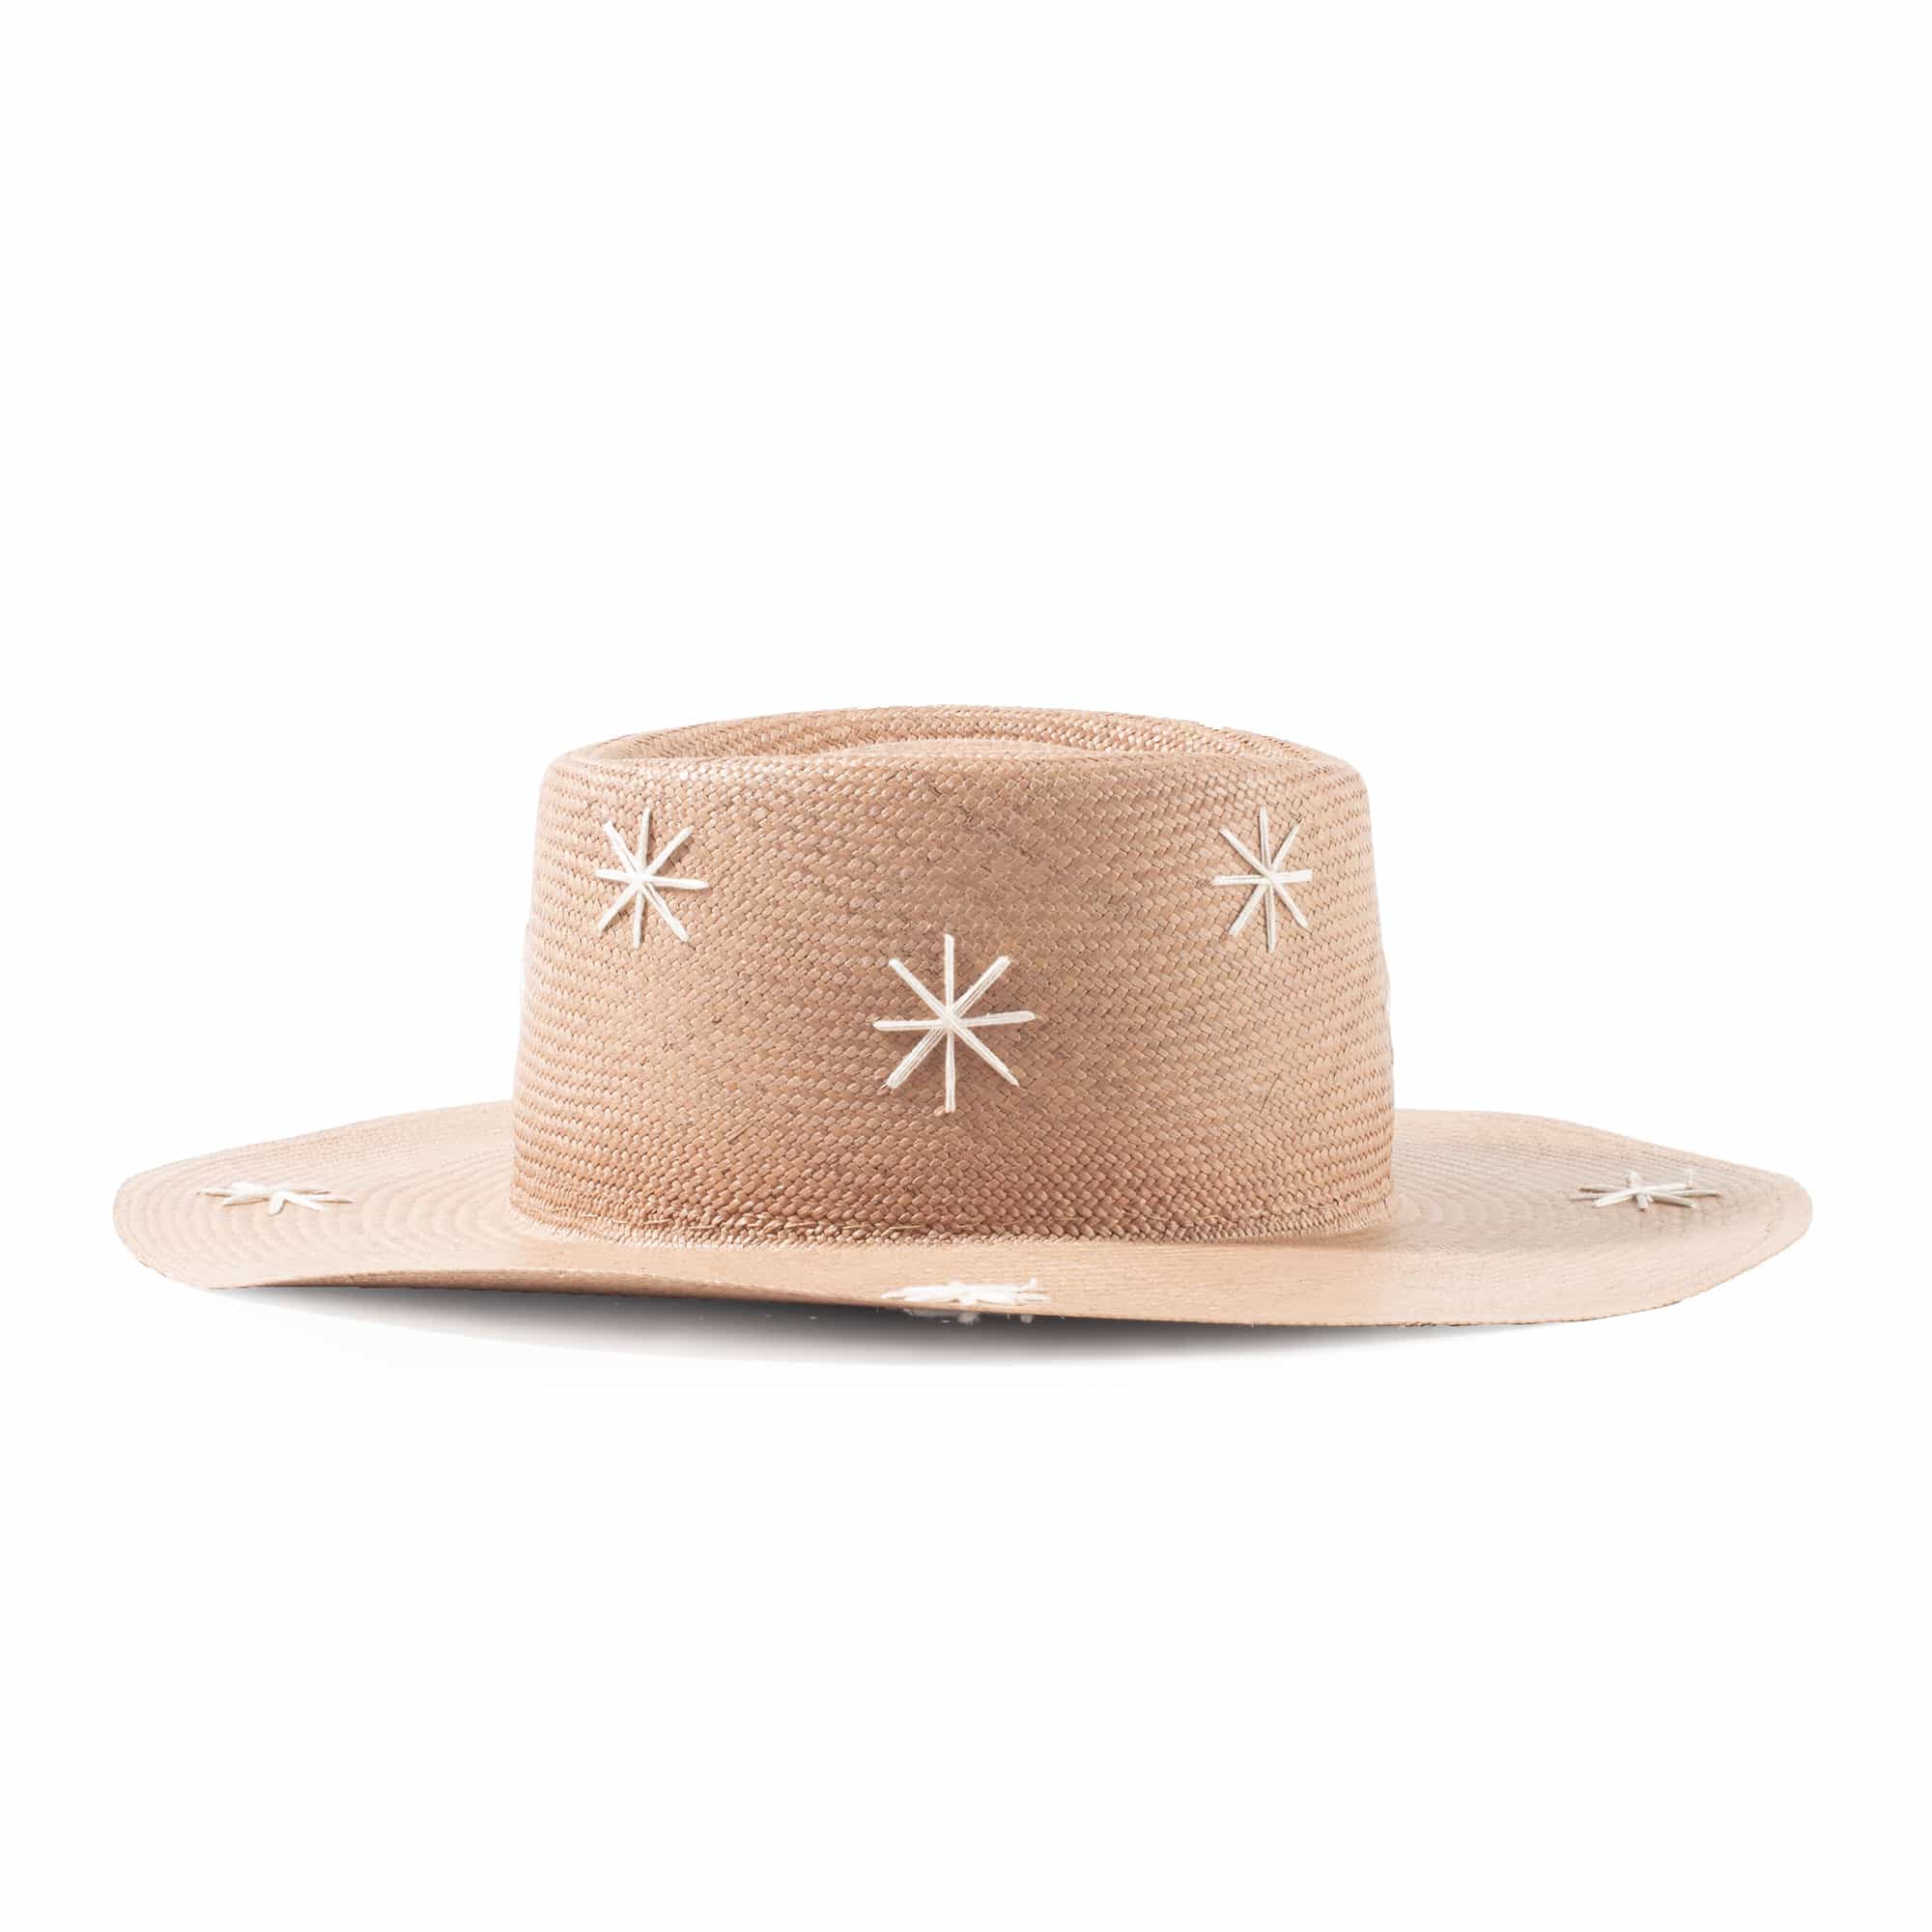 Sombrero Yucateca Hat - Terra lateral